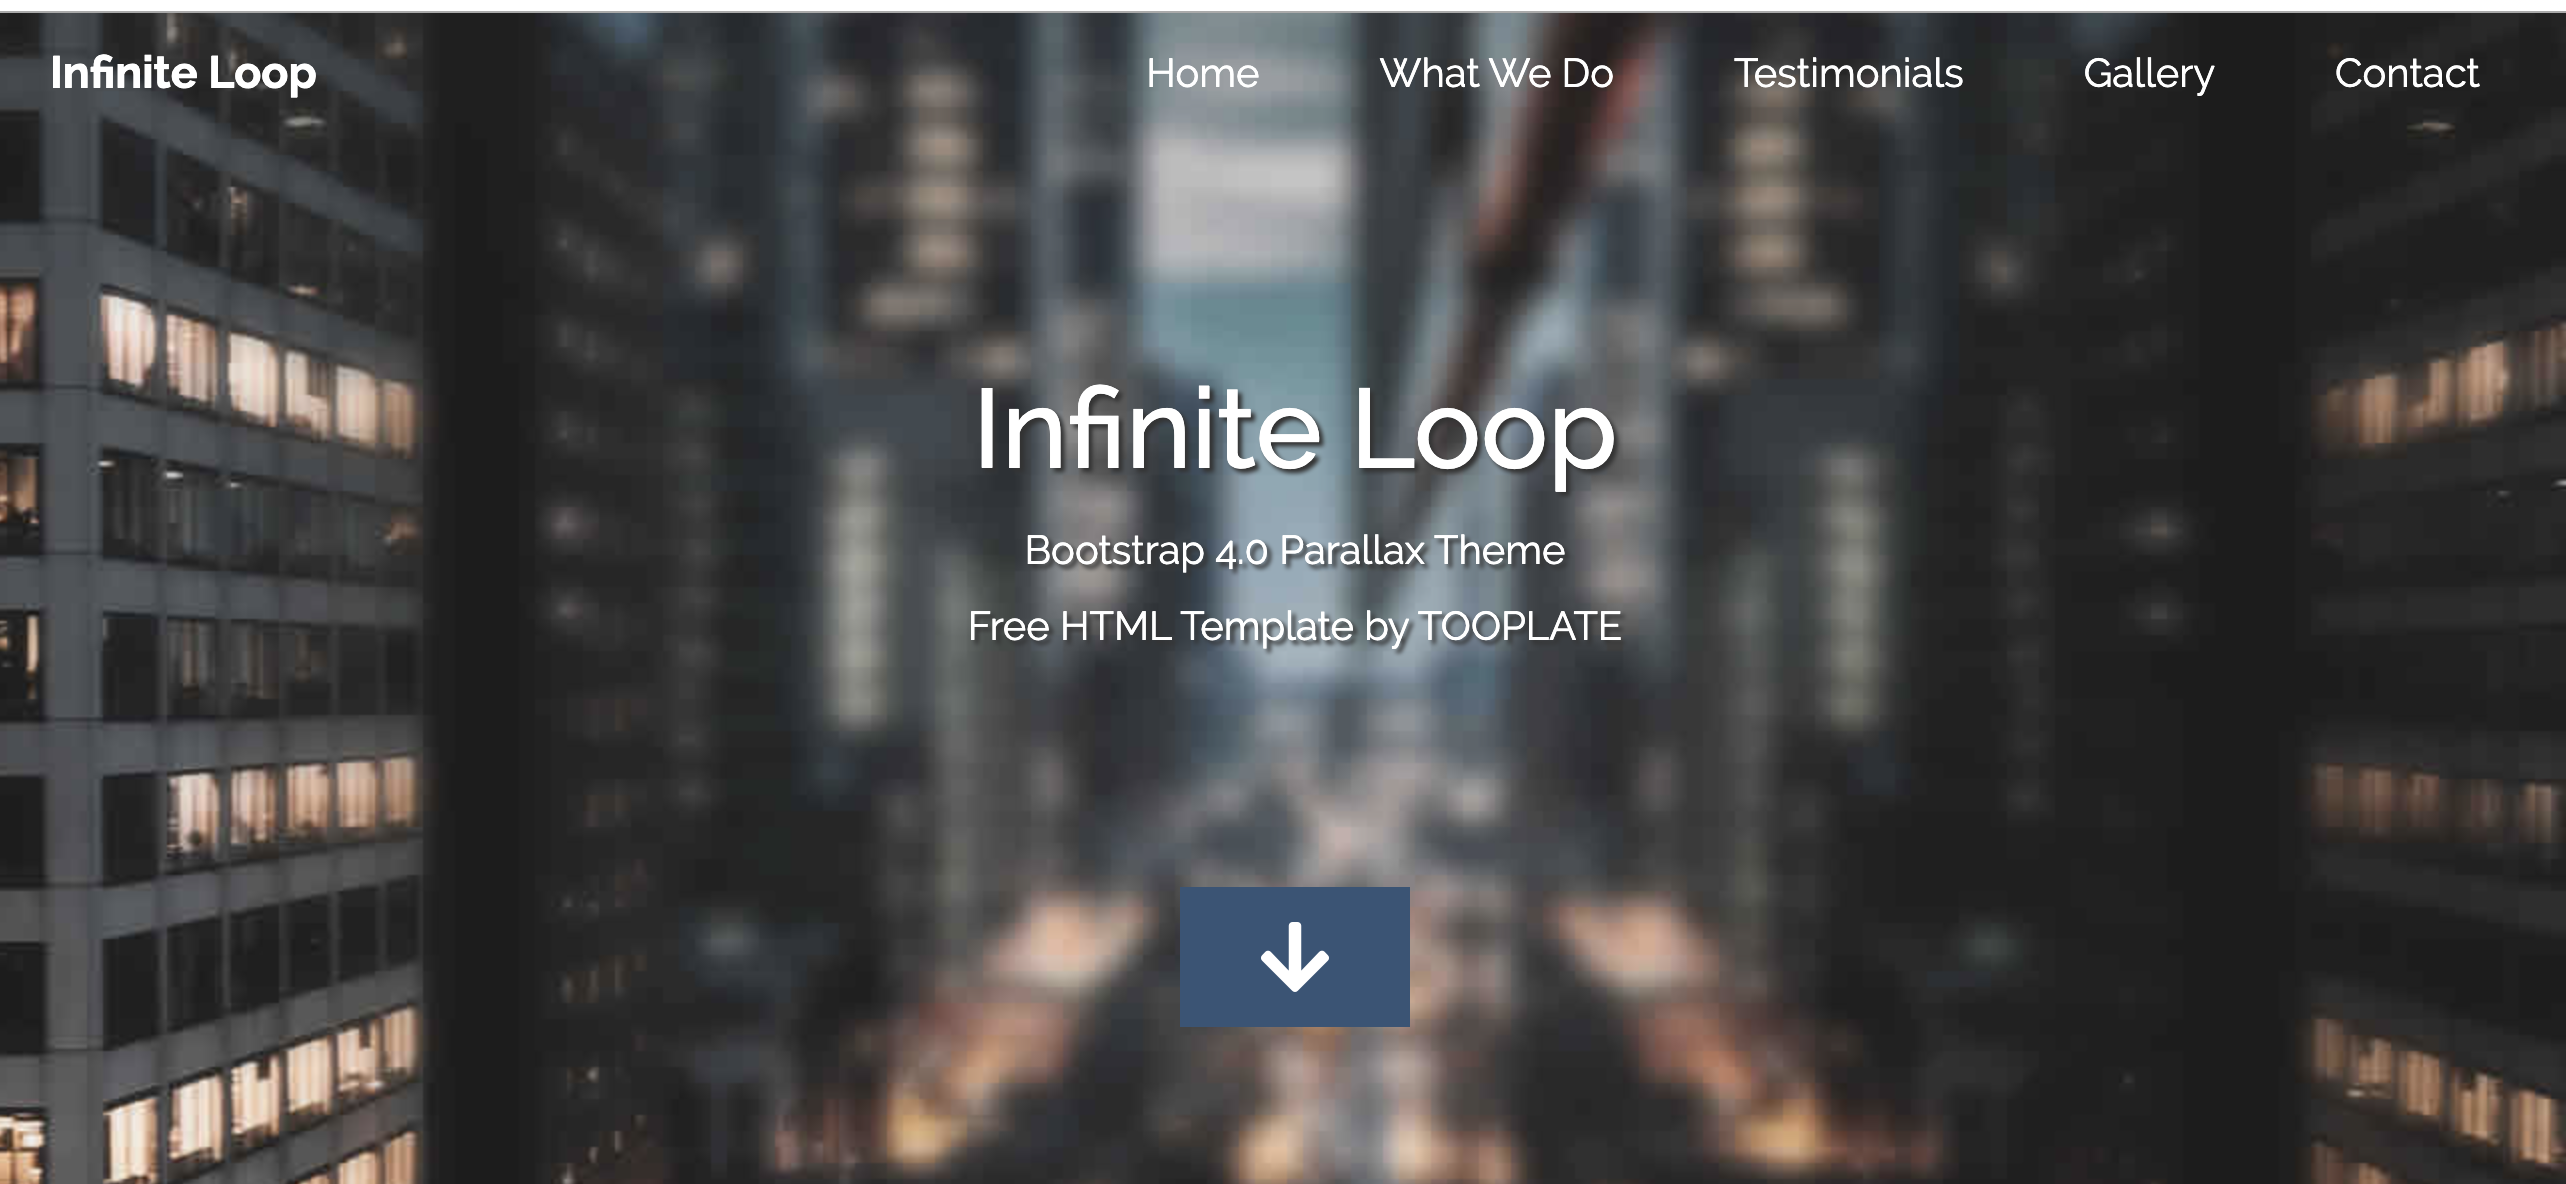  business website templates, Infinite Loop